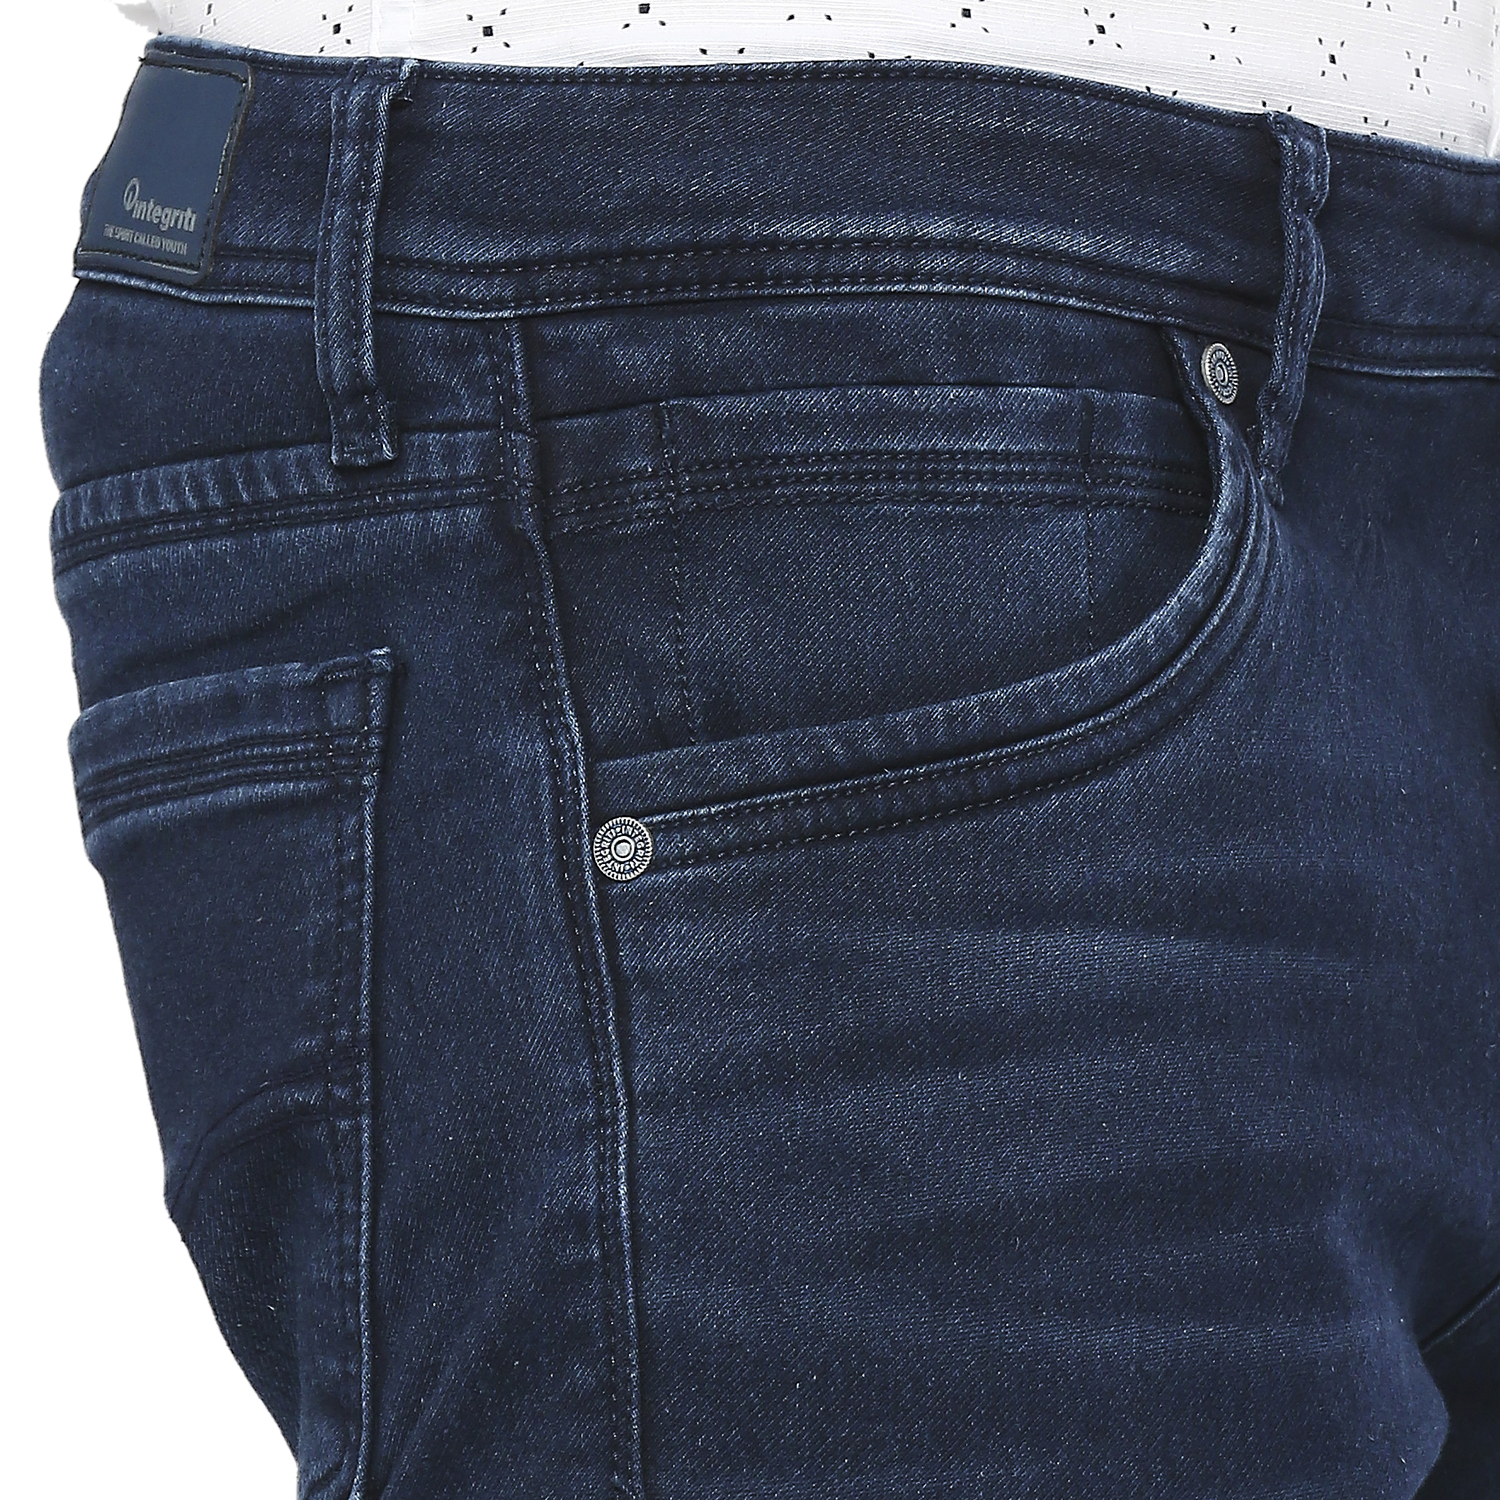 Integriti Casual Men's Jeans